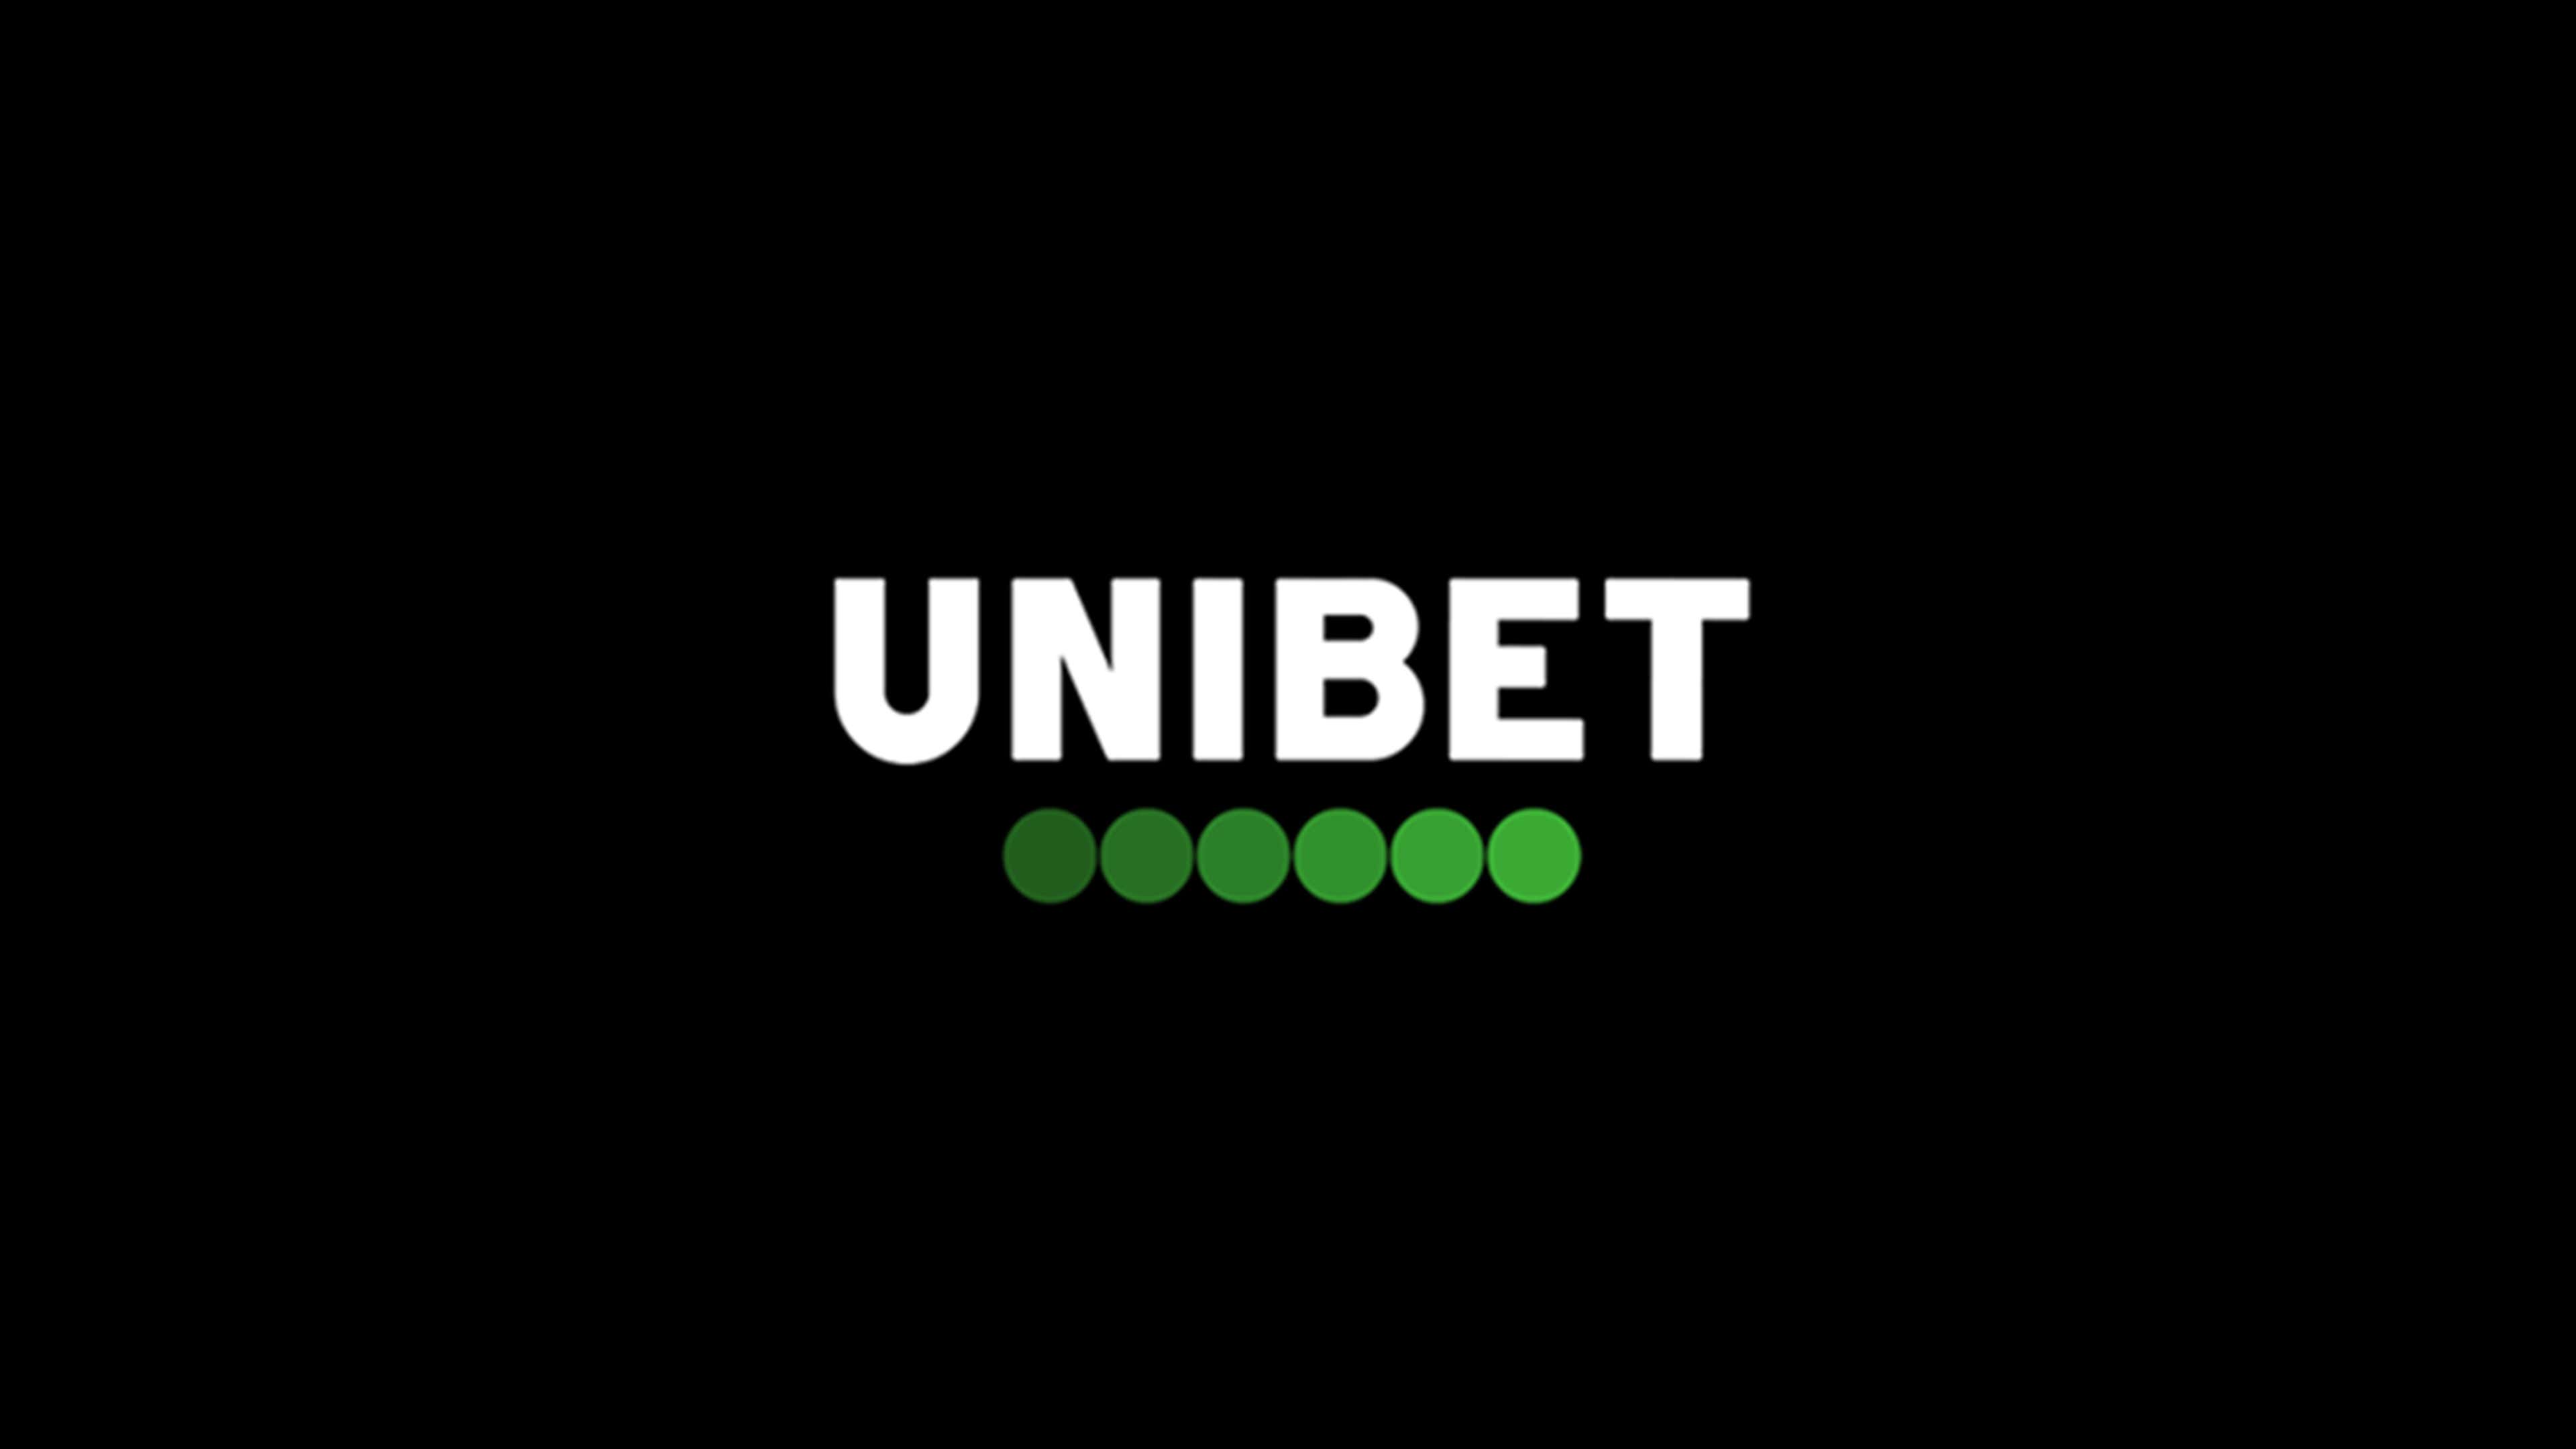 unibet betting